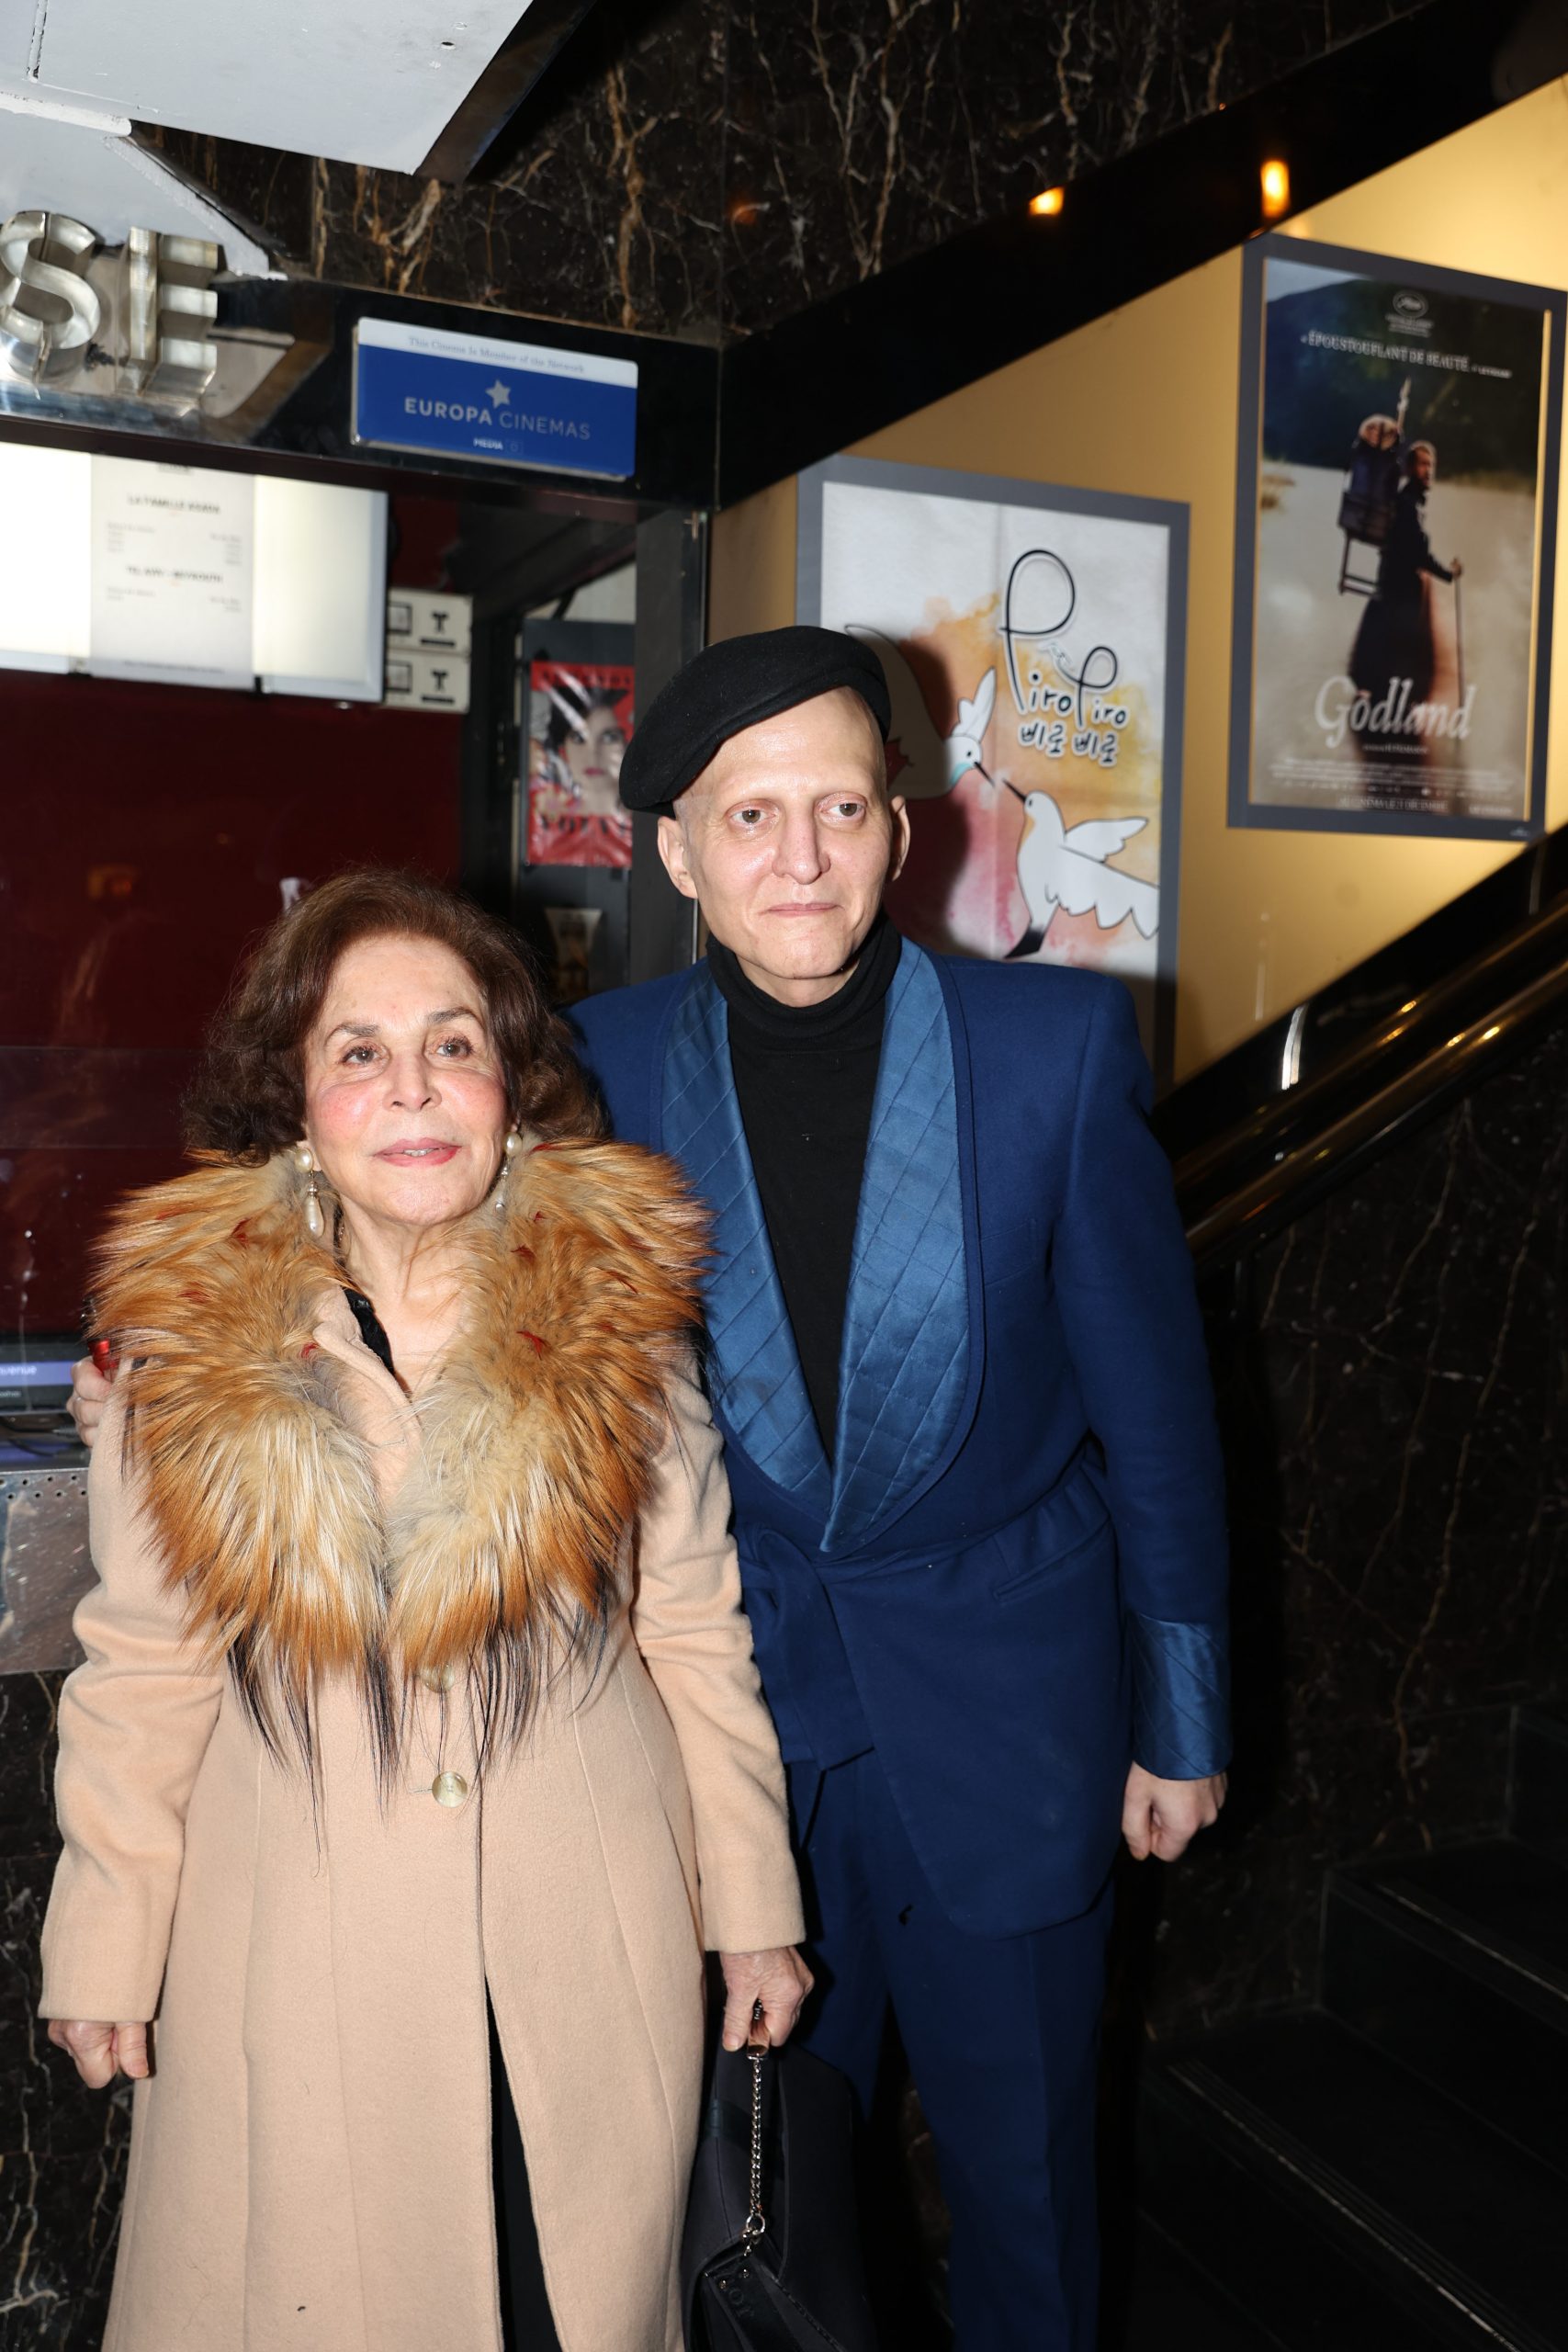 Ali Mahdavi and his mother at the premiere of BHL's film "Slava Ukraini" on 6 February 2023 at the Balzac. Photo: Igor Shabalin